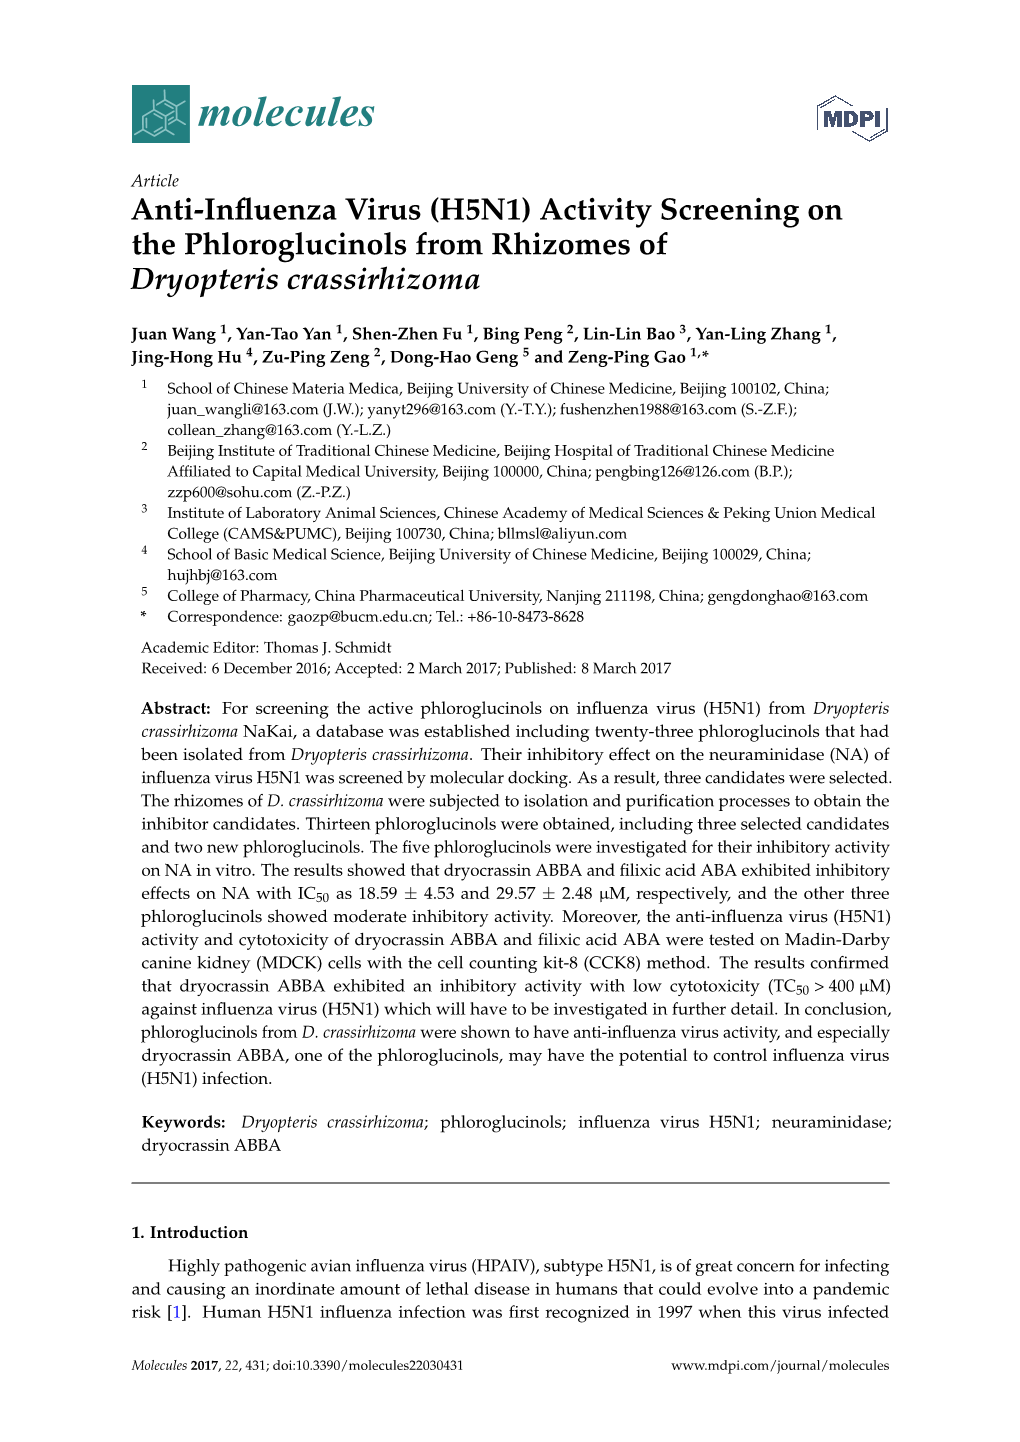 Anti-Influenza Virus (H5N1) Activity Screening on the Phloroglucinols